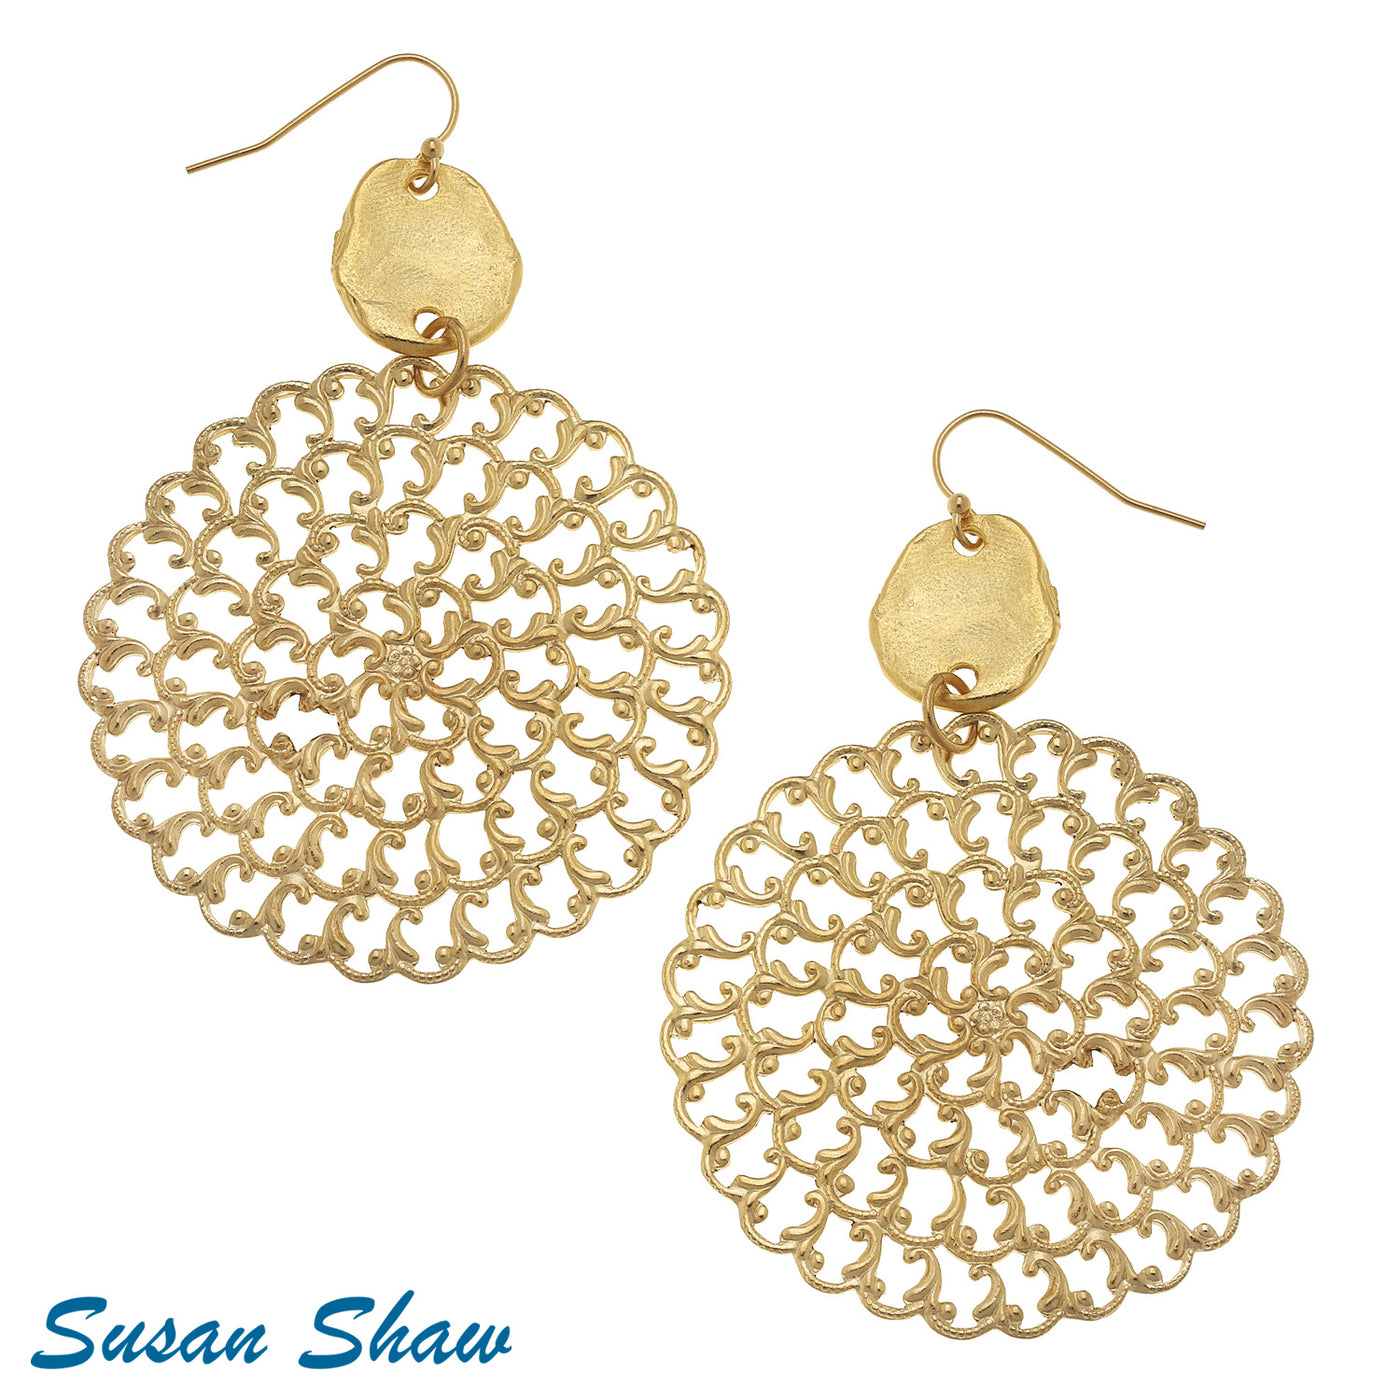 Susan Shaw Filigree Earrings